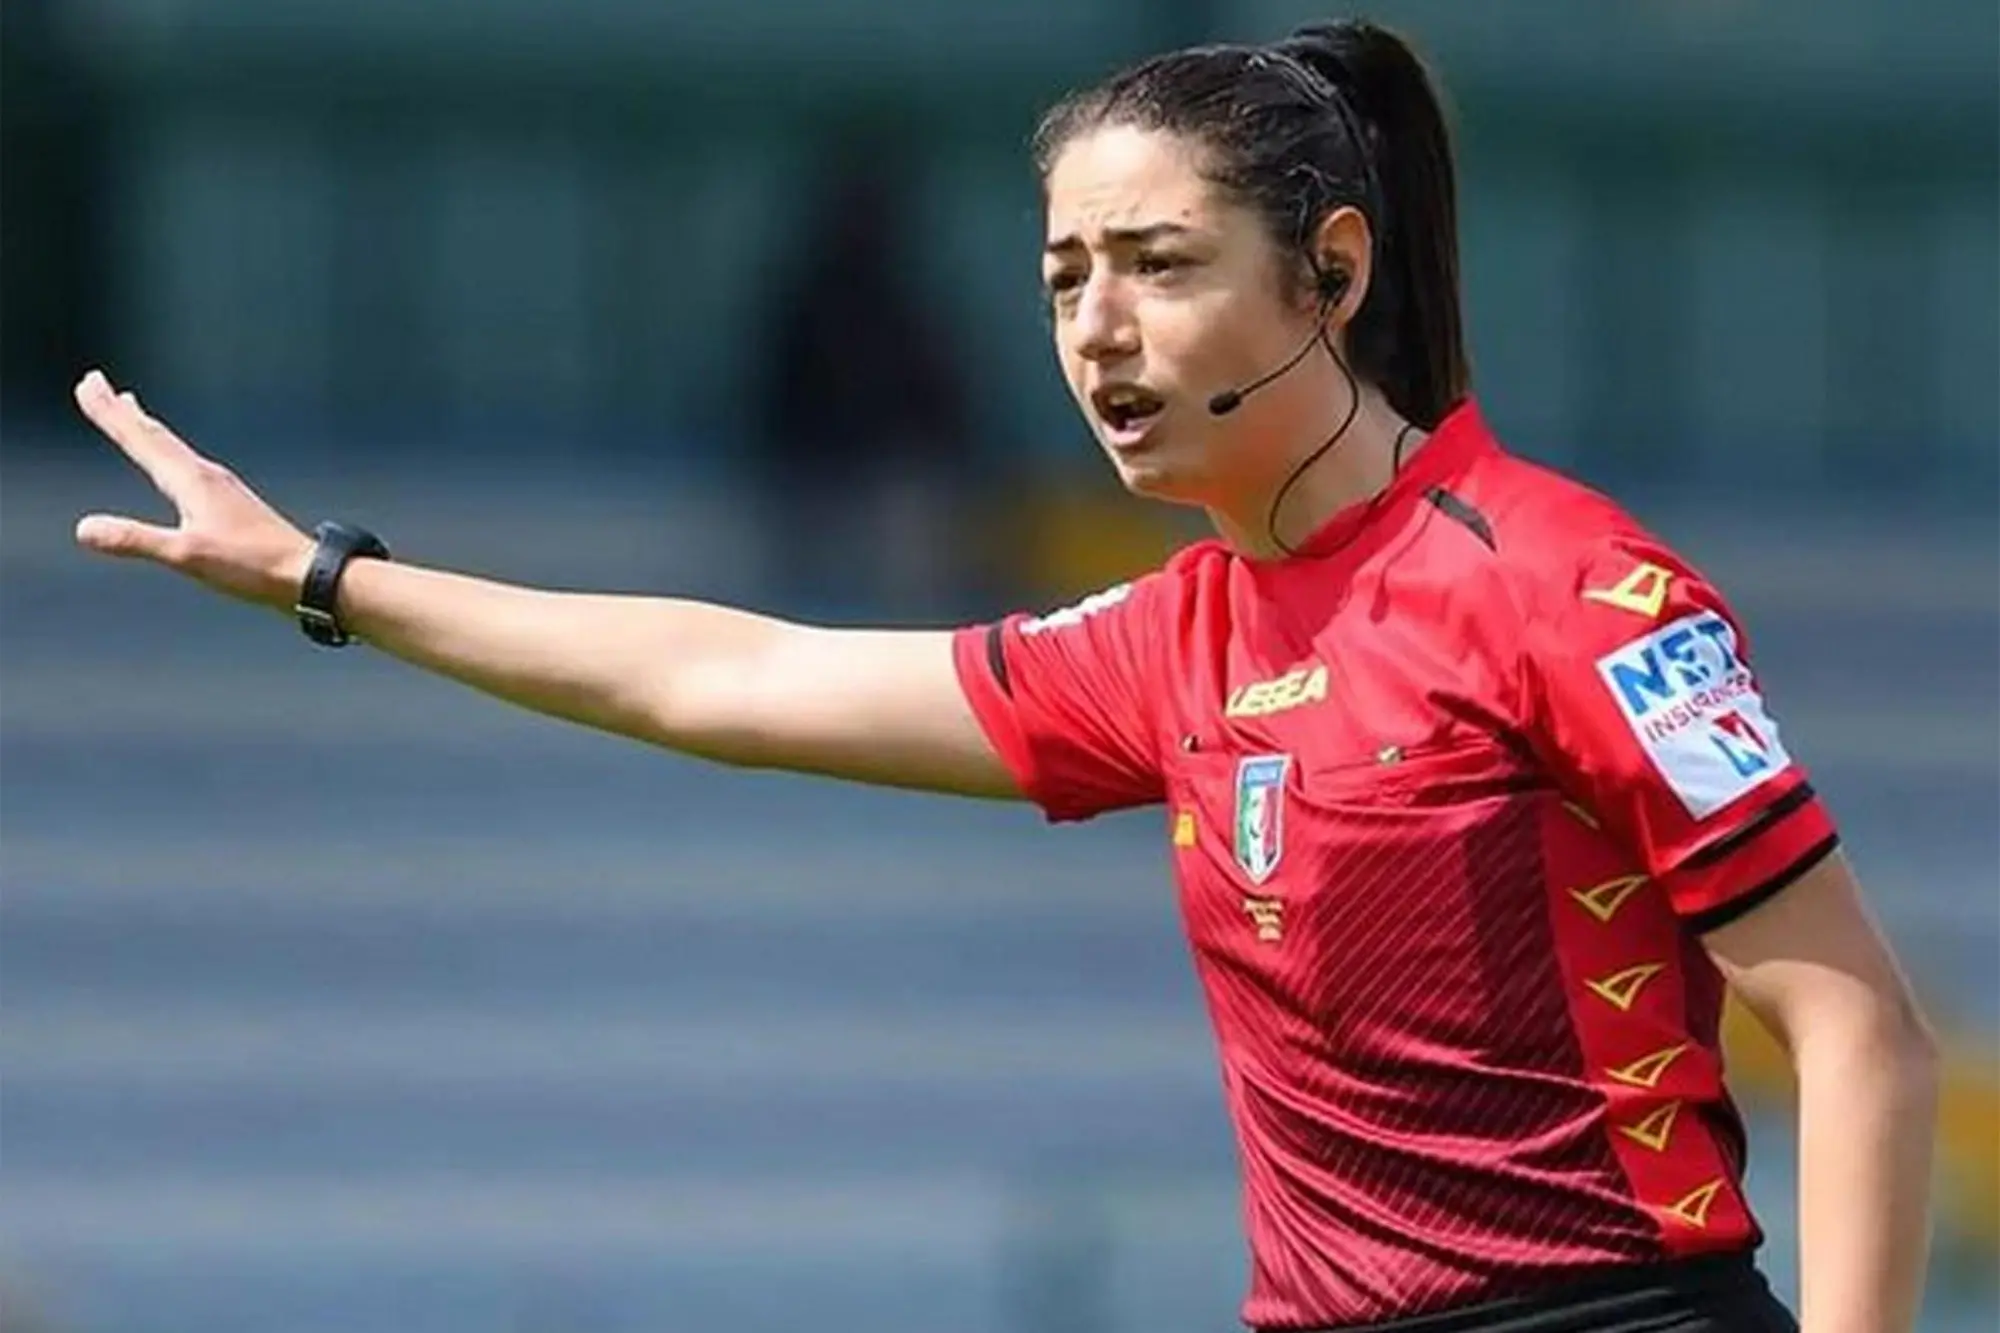 Maria Sole Ferrieri Caputi referee on Saturday at the Domus (Archive)